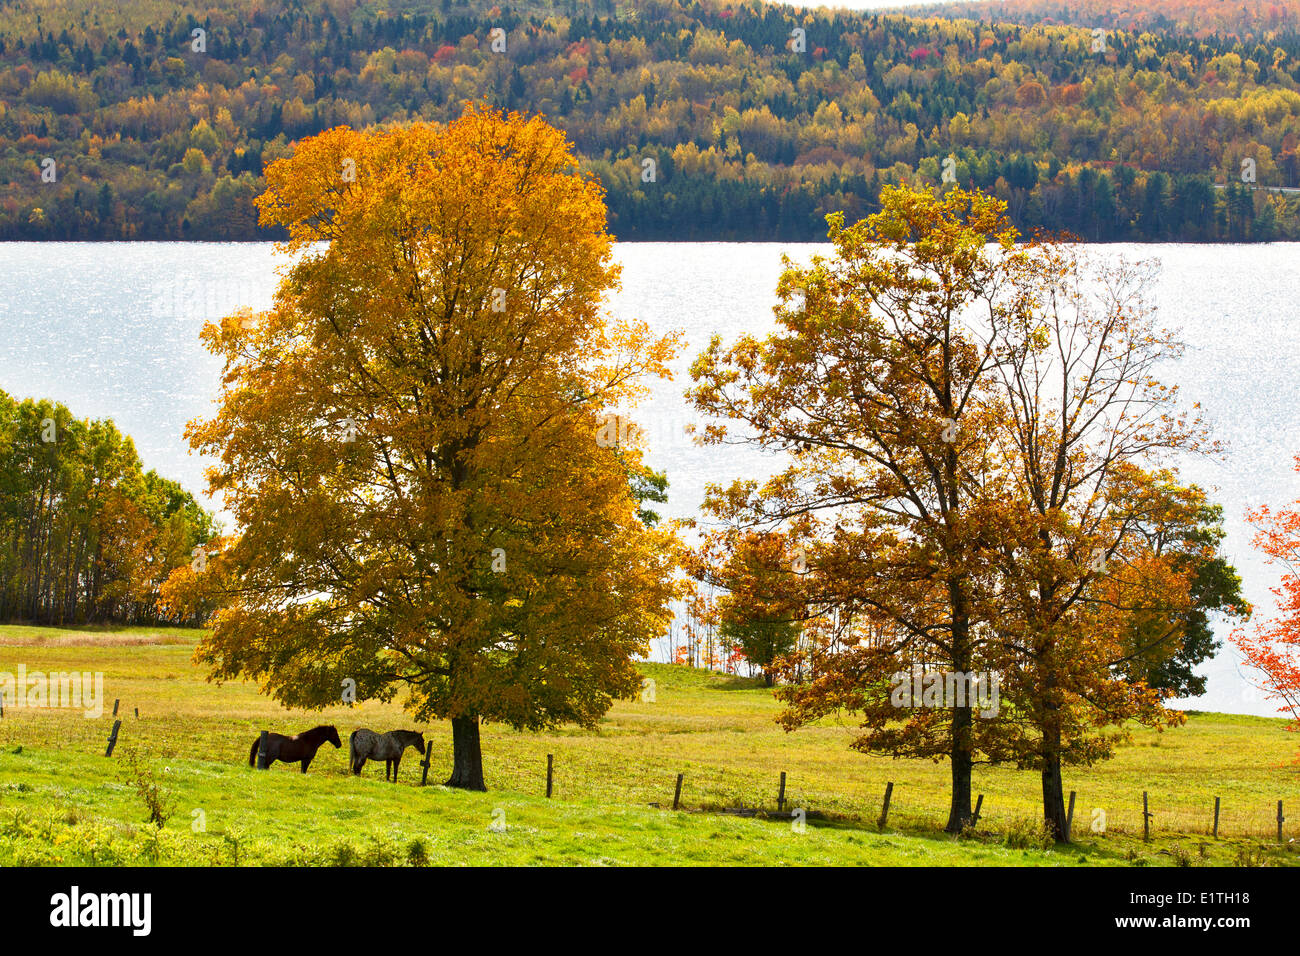 Horses and Maple Tree in fall foliage, Queensbury, Saint John River, New Brunswick, Canada Stock Photo